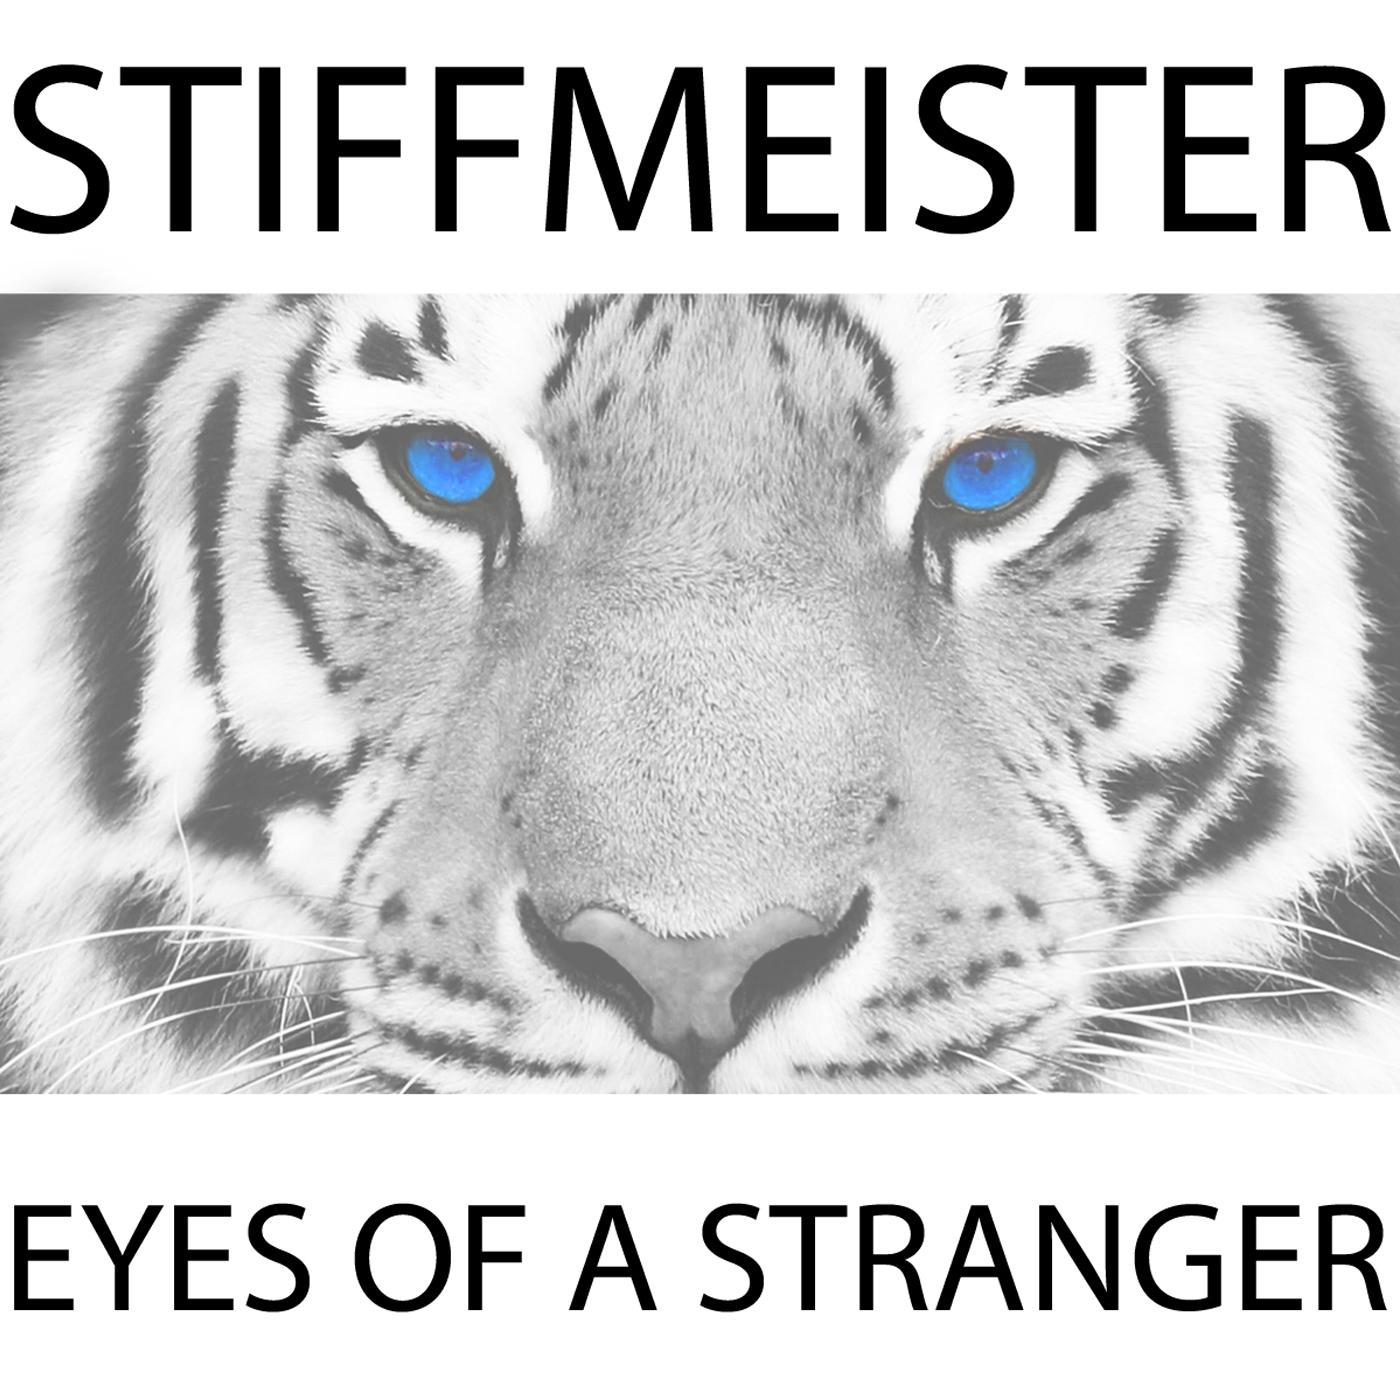 Eyes of a stranger